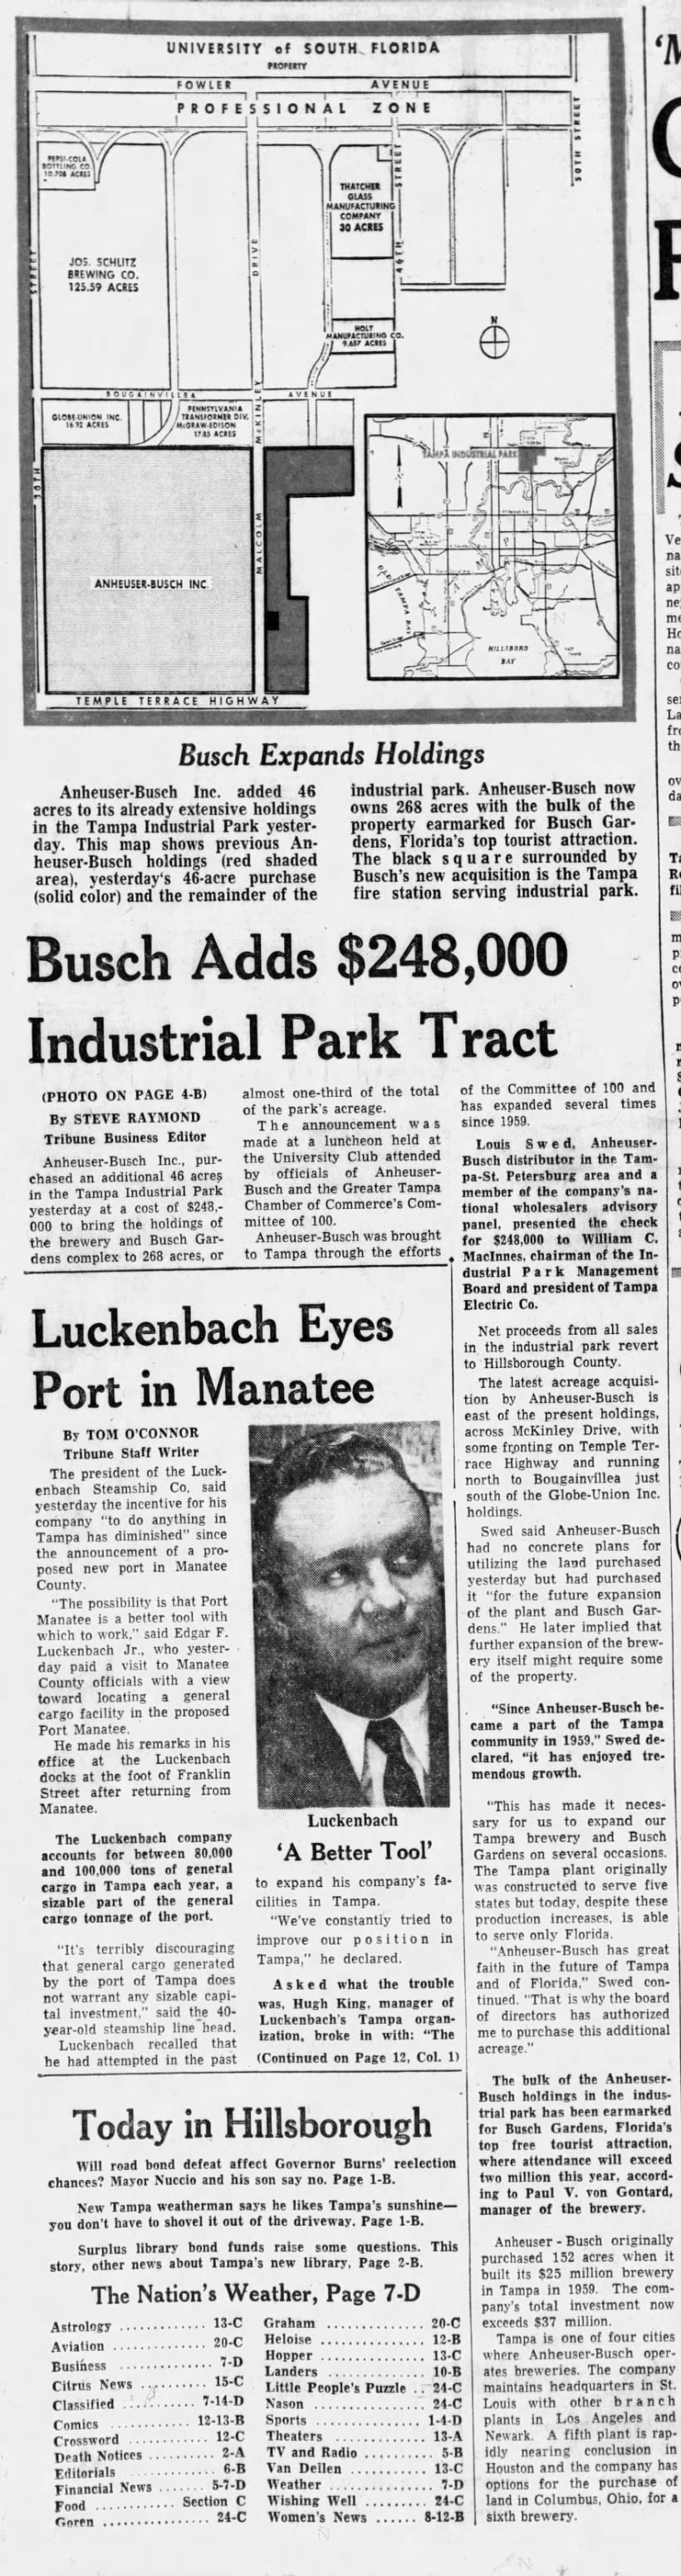 Busch Adds $248,000 Industrial Park Tract/Steve Raymond